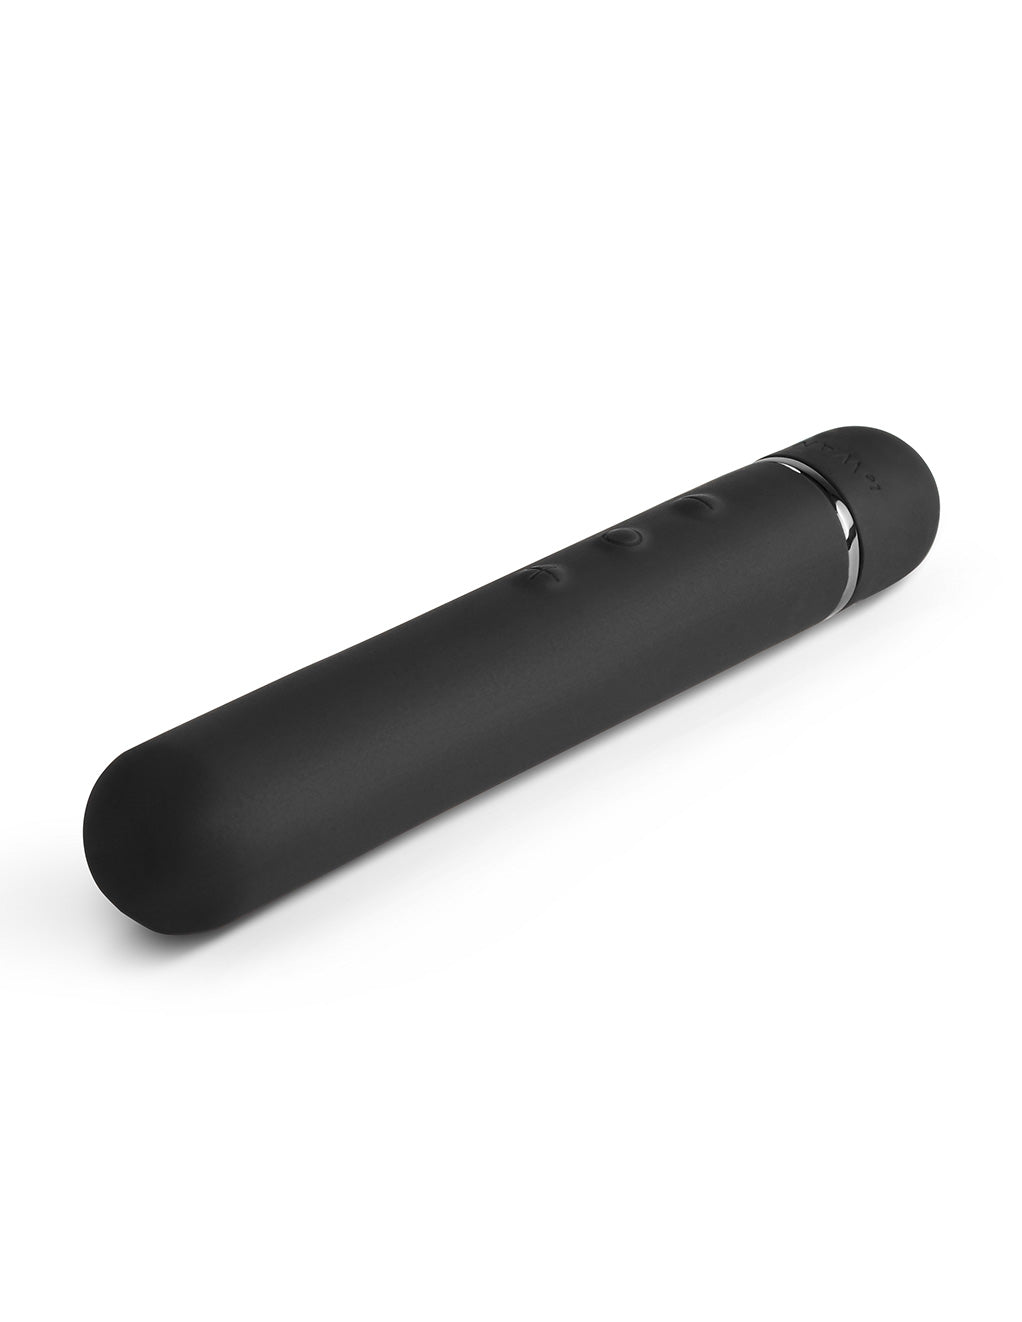 Le Wand Baton Rechargeable Clitoral Vibrator- Black- Top